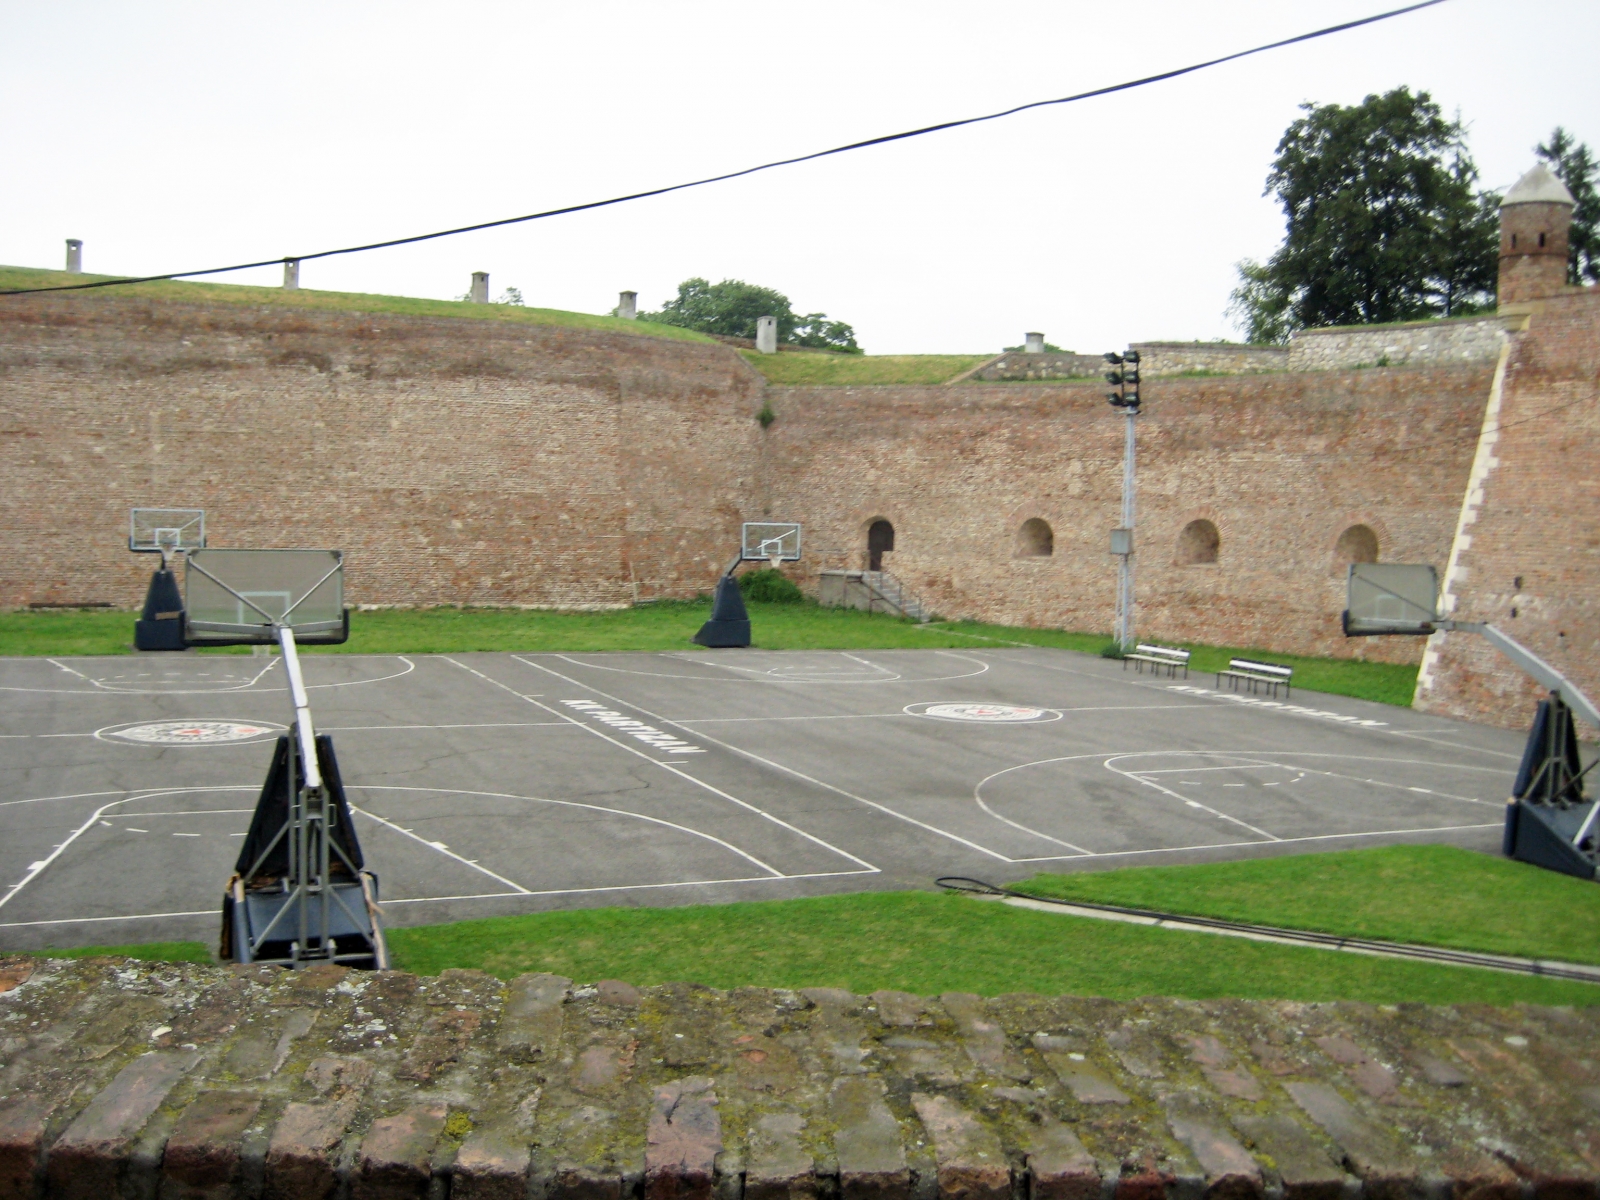 Basketball Courts in Kalemegdan Fortress, Belgrade, Serbia